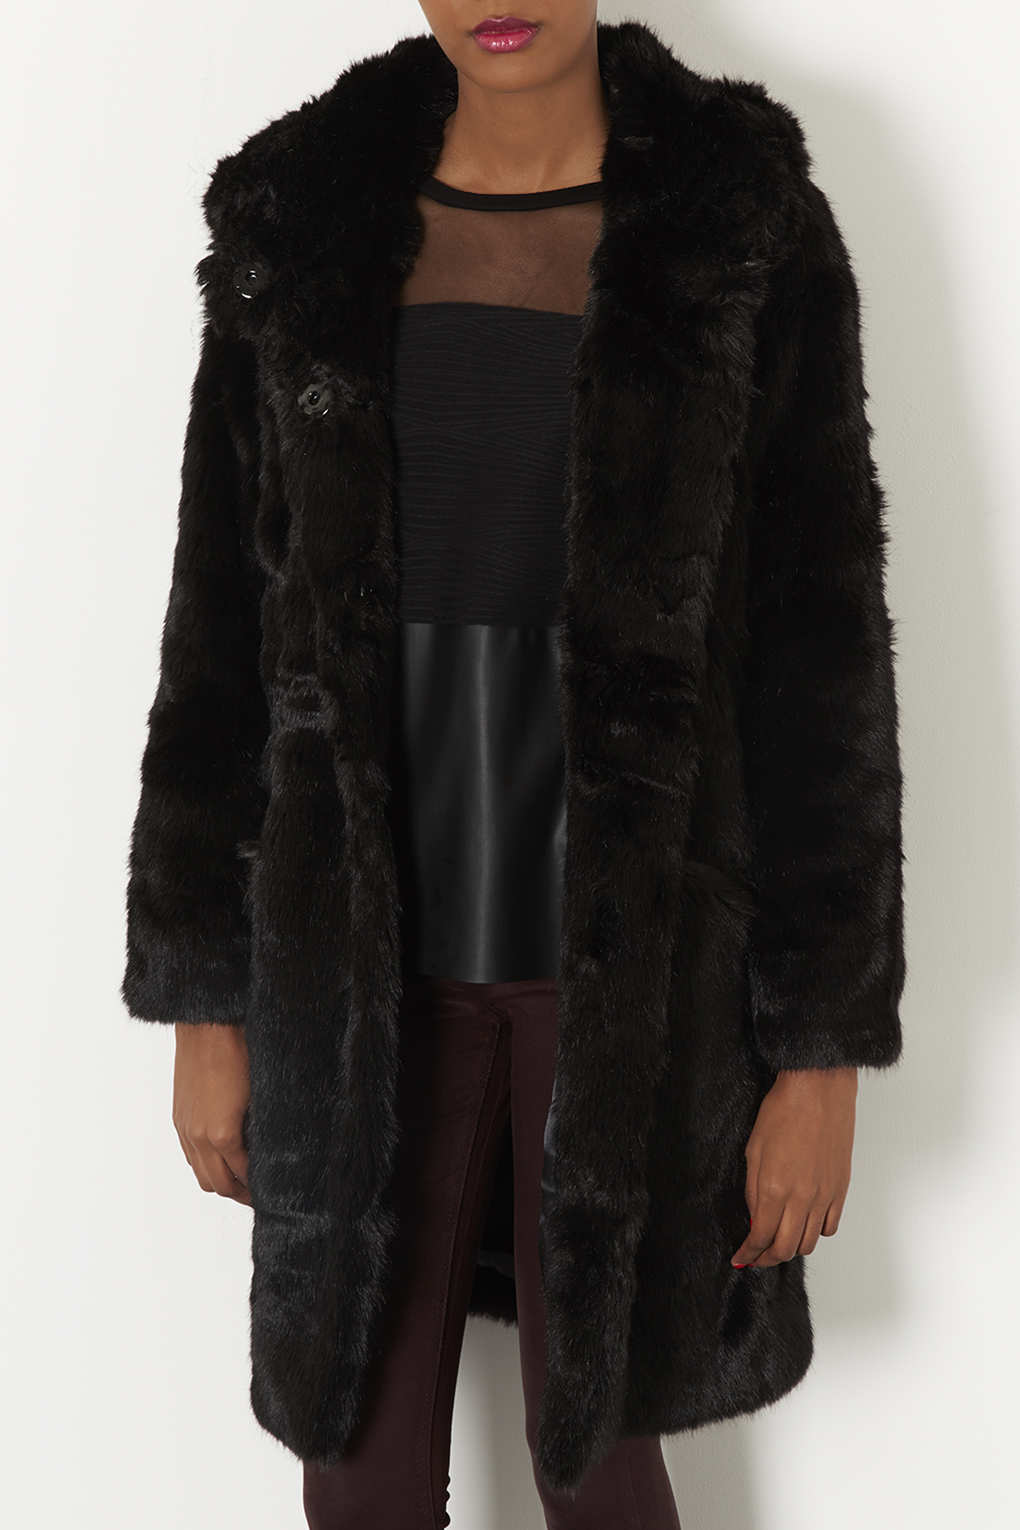 TOPSHOP Oversized Faux Fur Hooded Coat in Black - Lyst